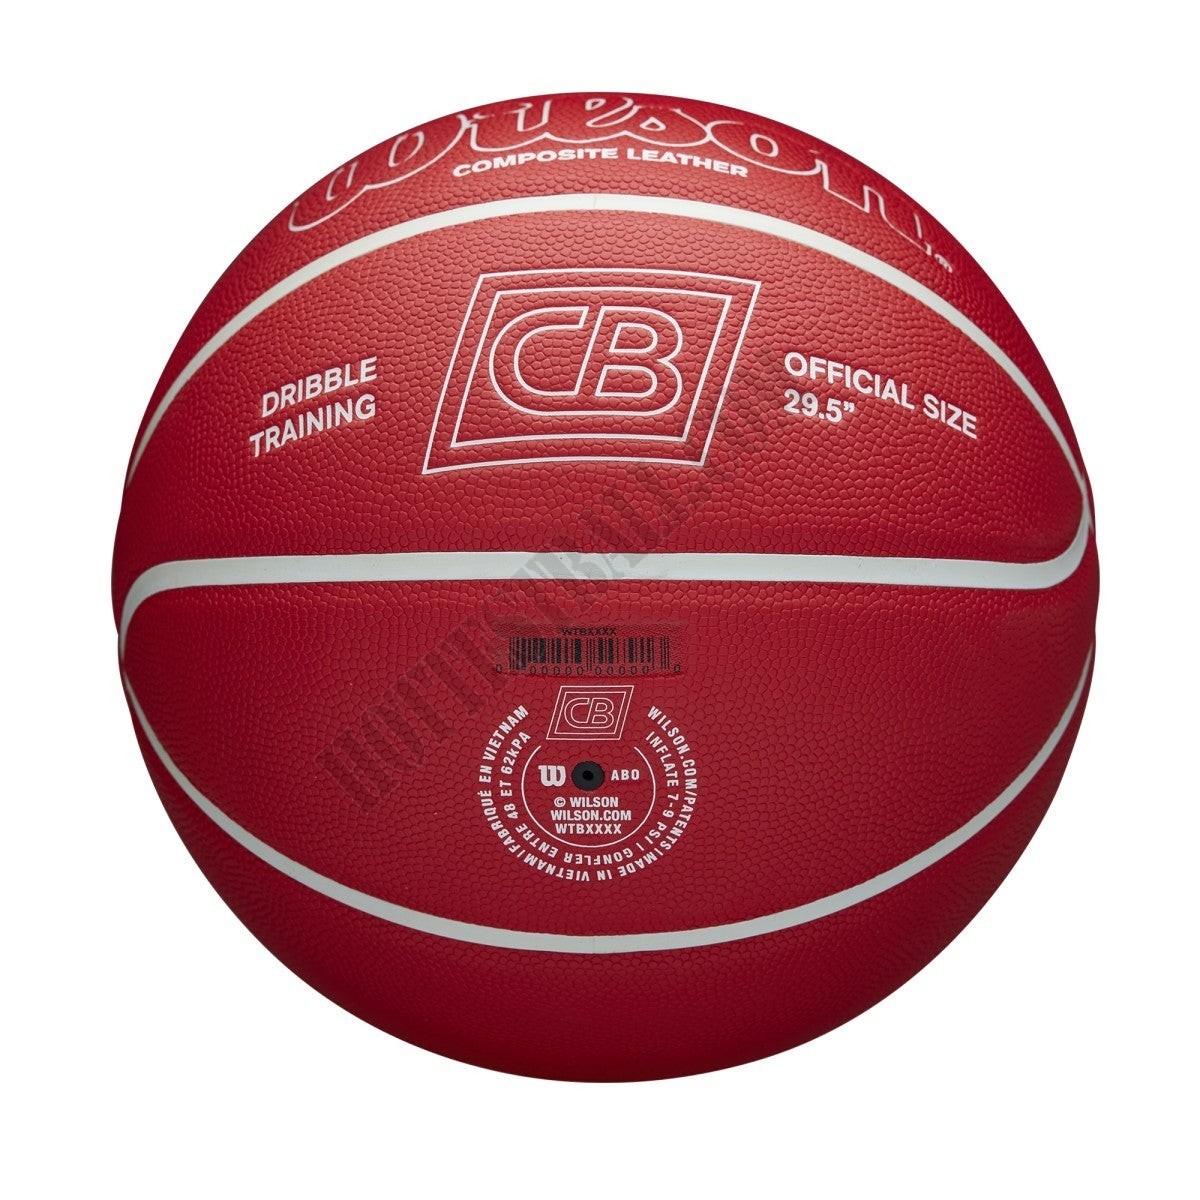 Chris Brickley Dribble Training Basketball - Wilson Discount Store - -5